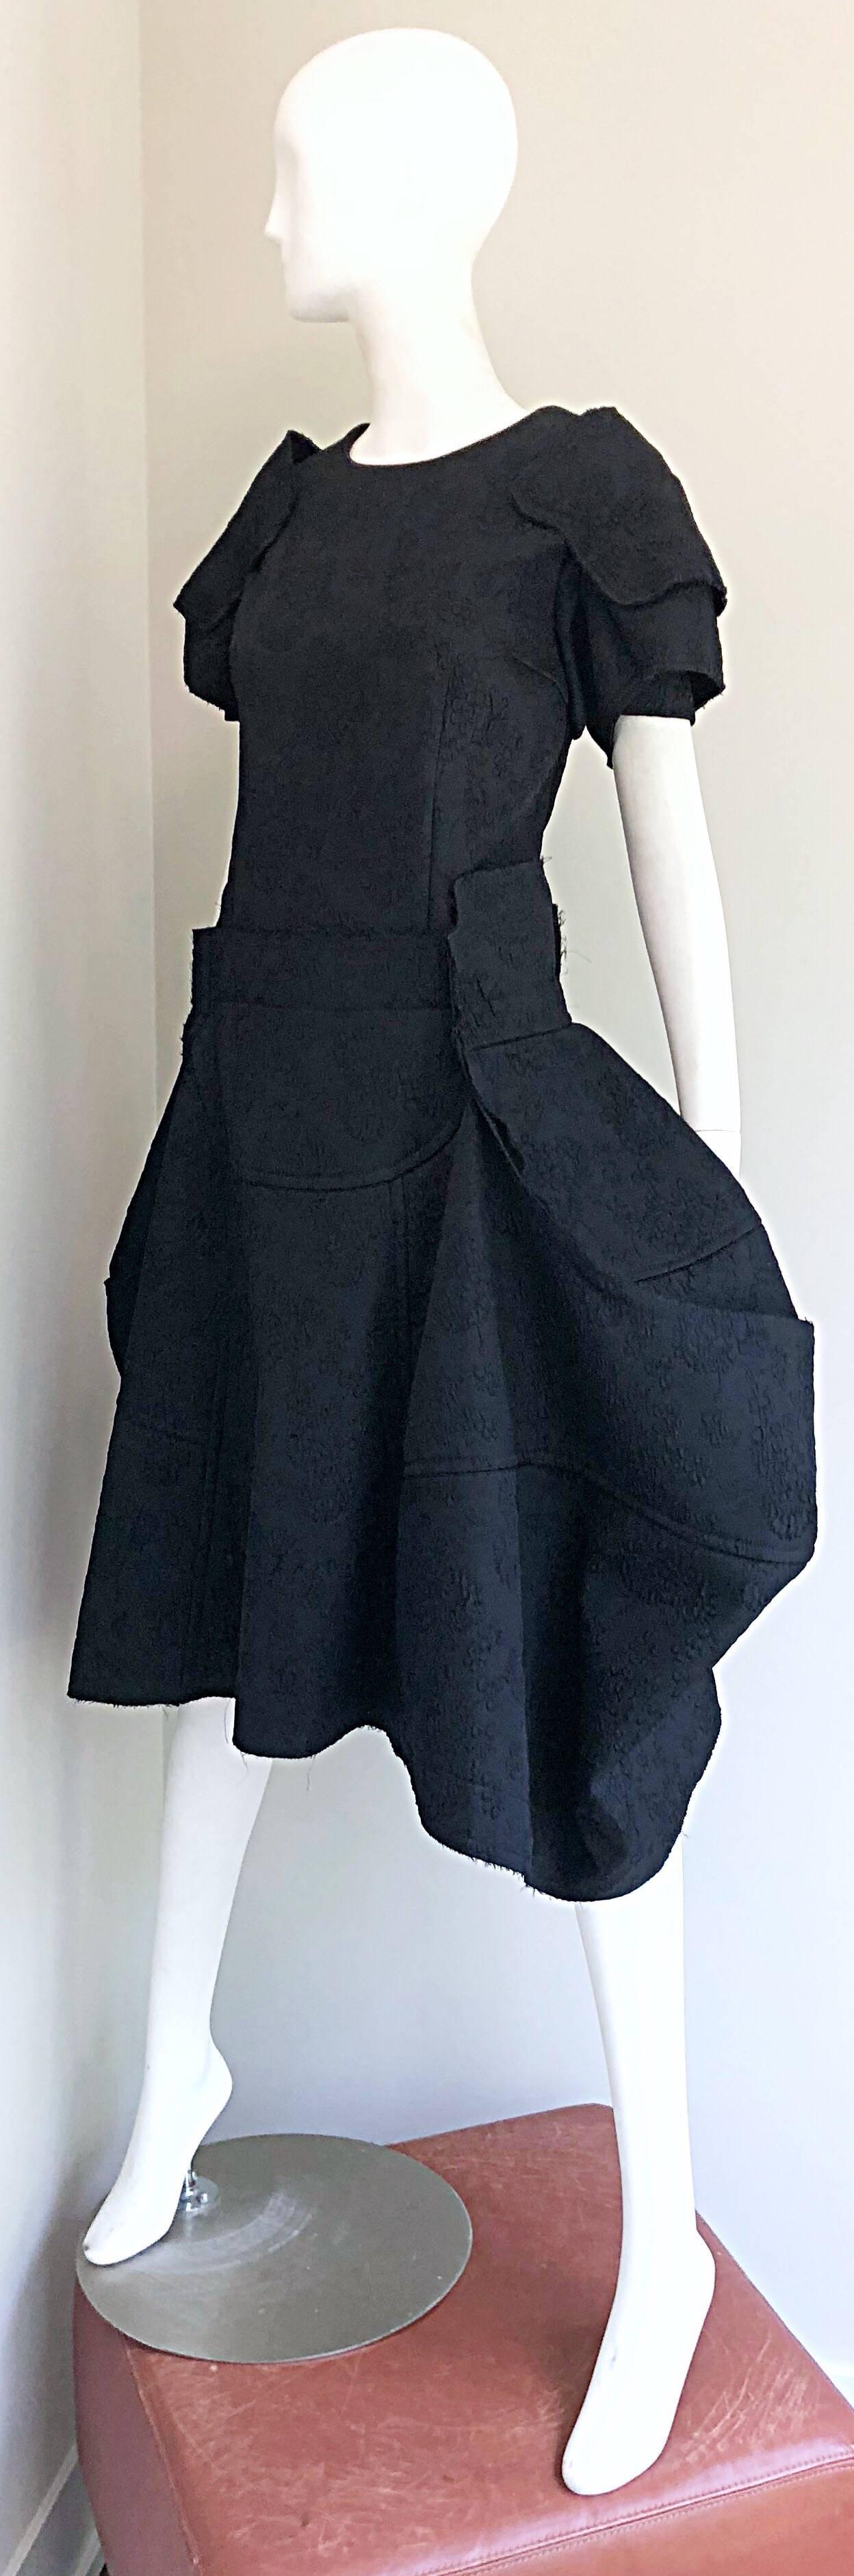 Comme Des Garcons Samurai 2016 Collection Black Avant Garde Collectible Dress 5